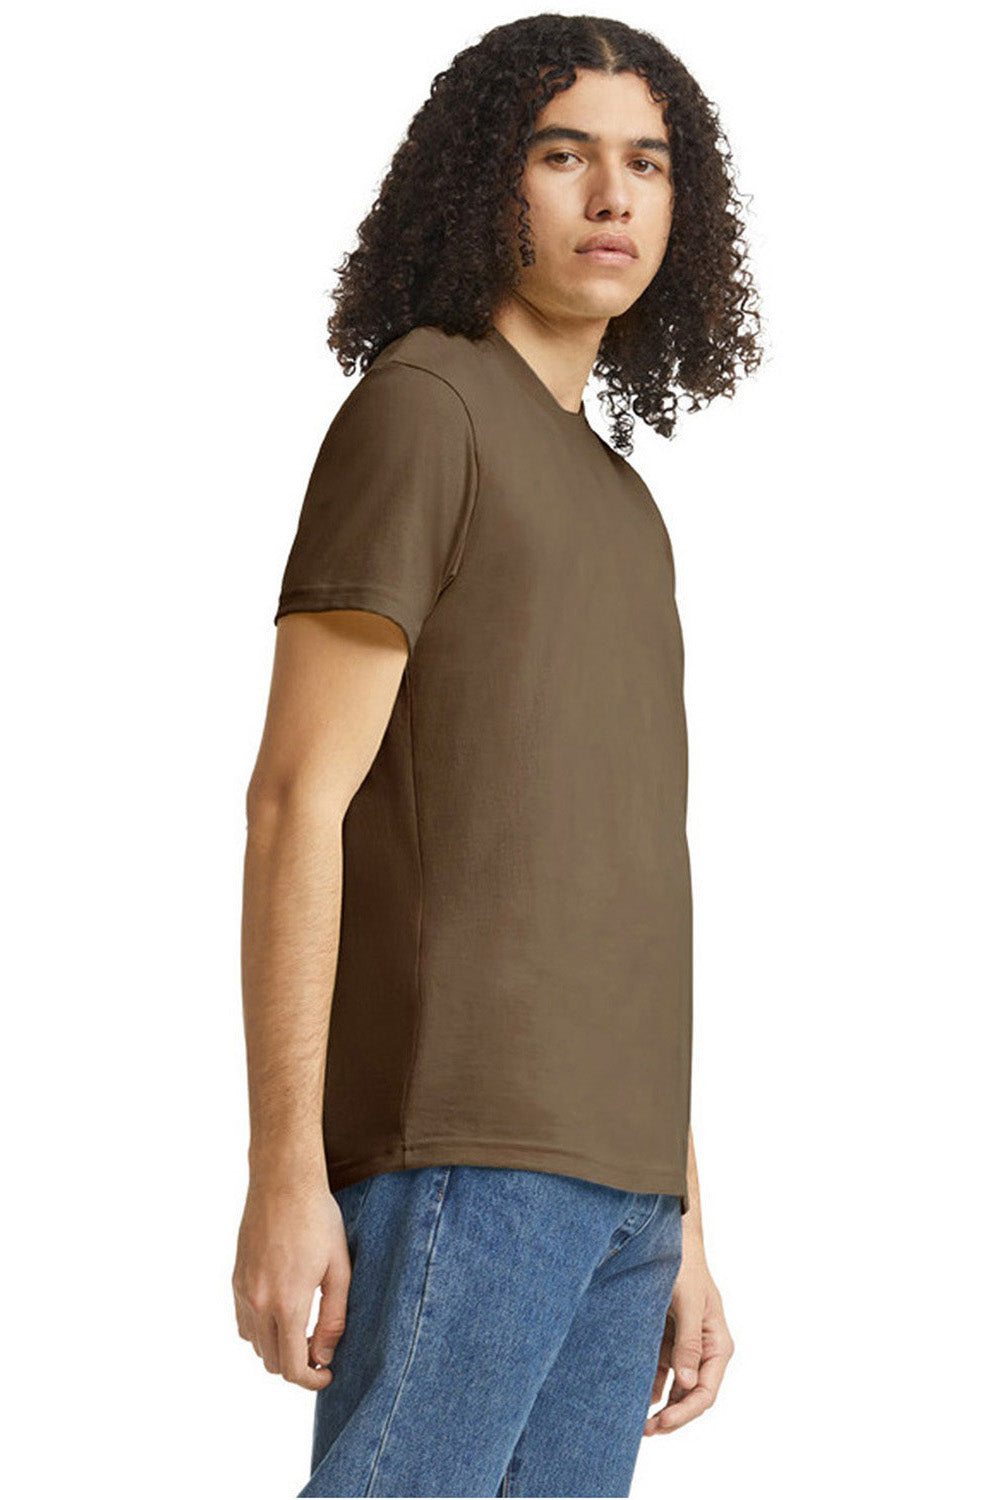 American Apparel 2001CVC Mens CVC Short Sleeve Crewneck T-Shirt Heather Army Brown Model Side